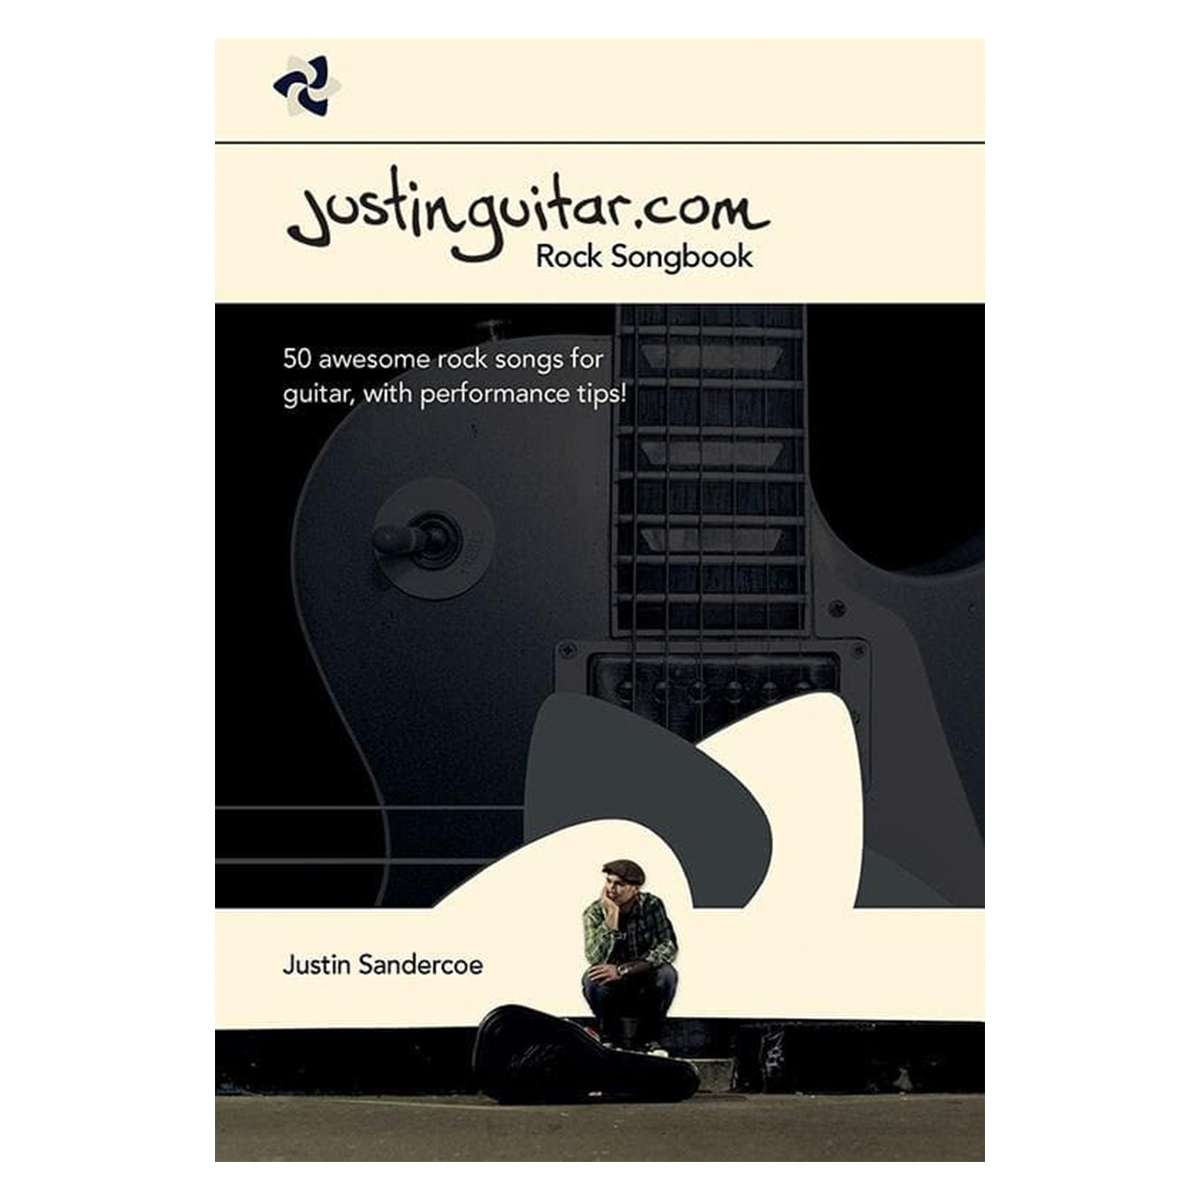 The JustinGuitar.com Rock Song Book